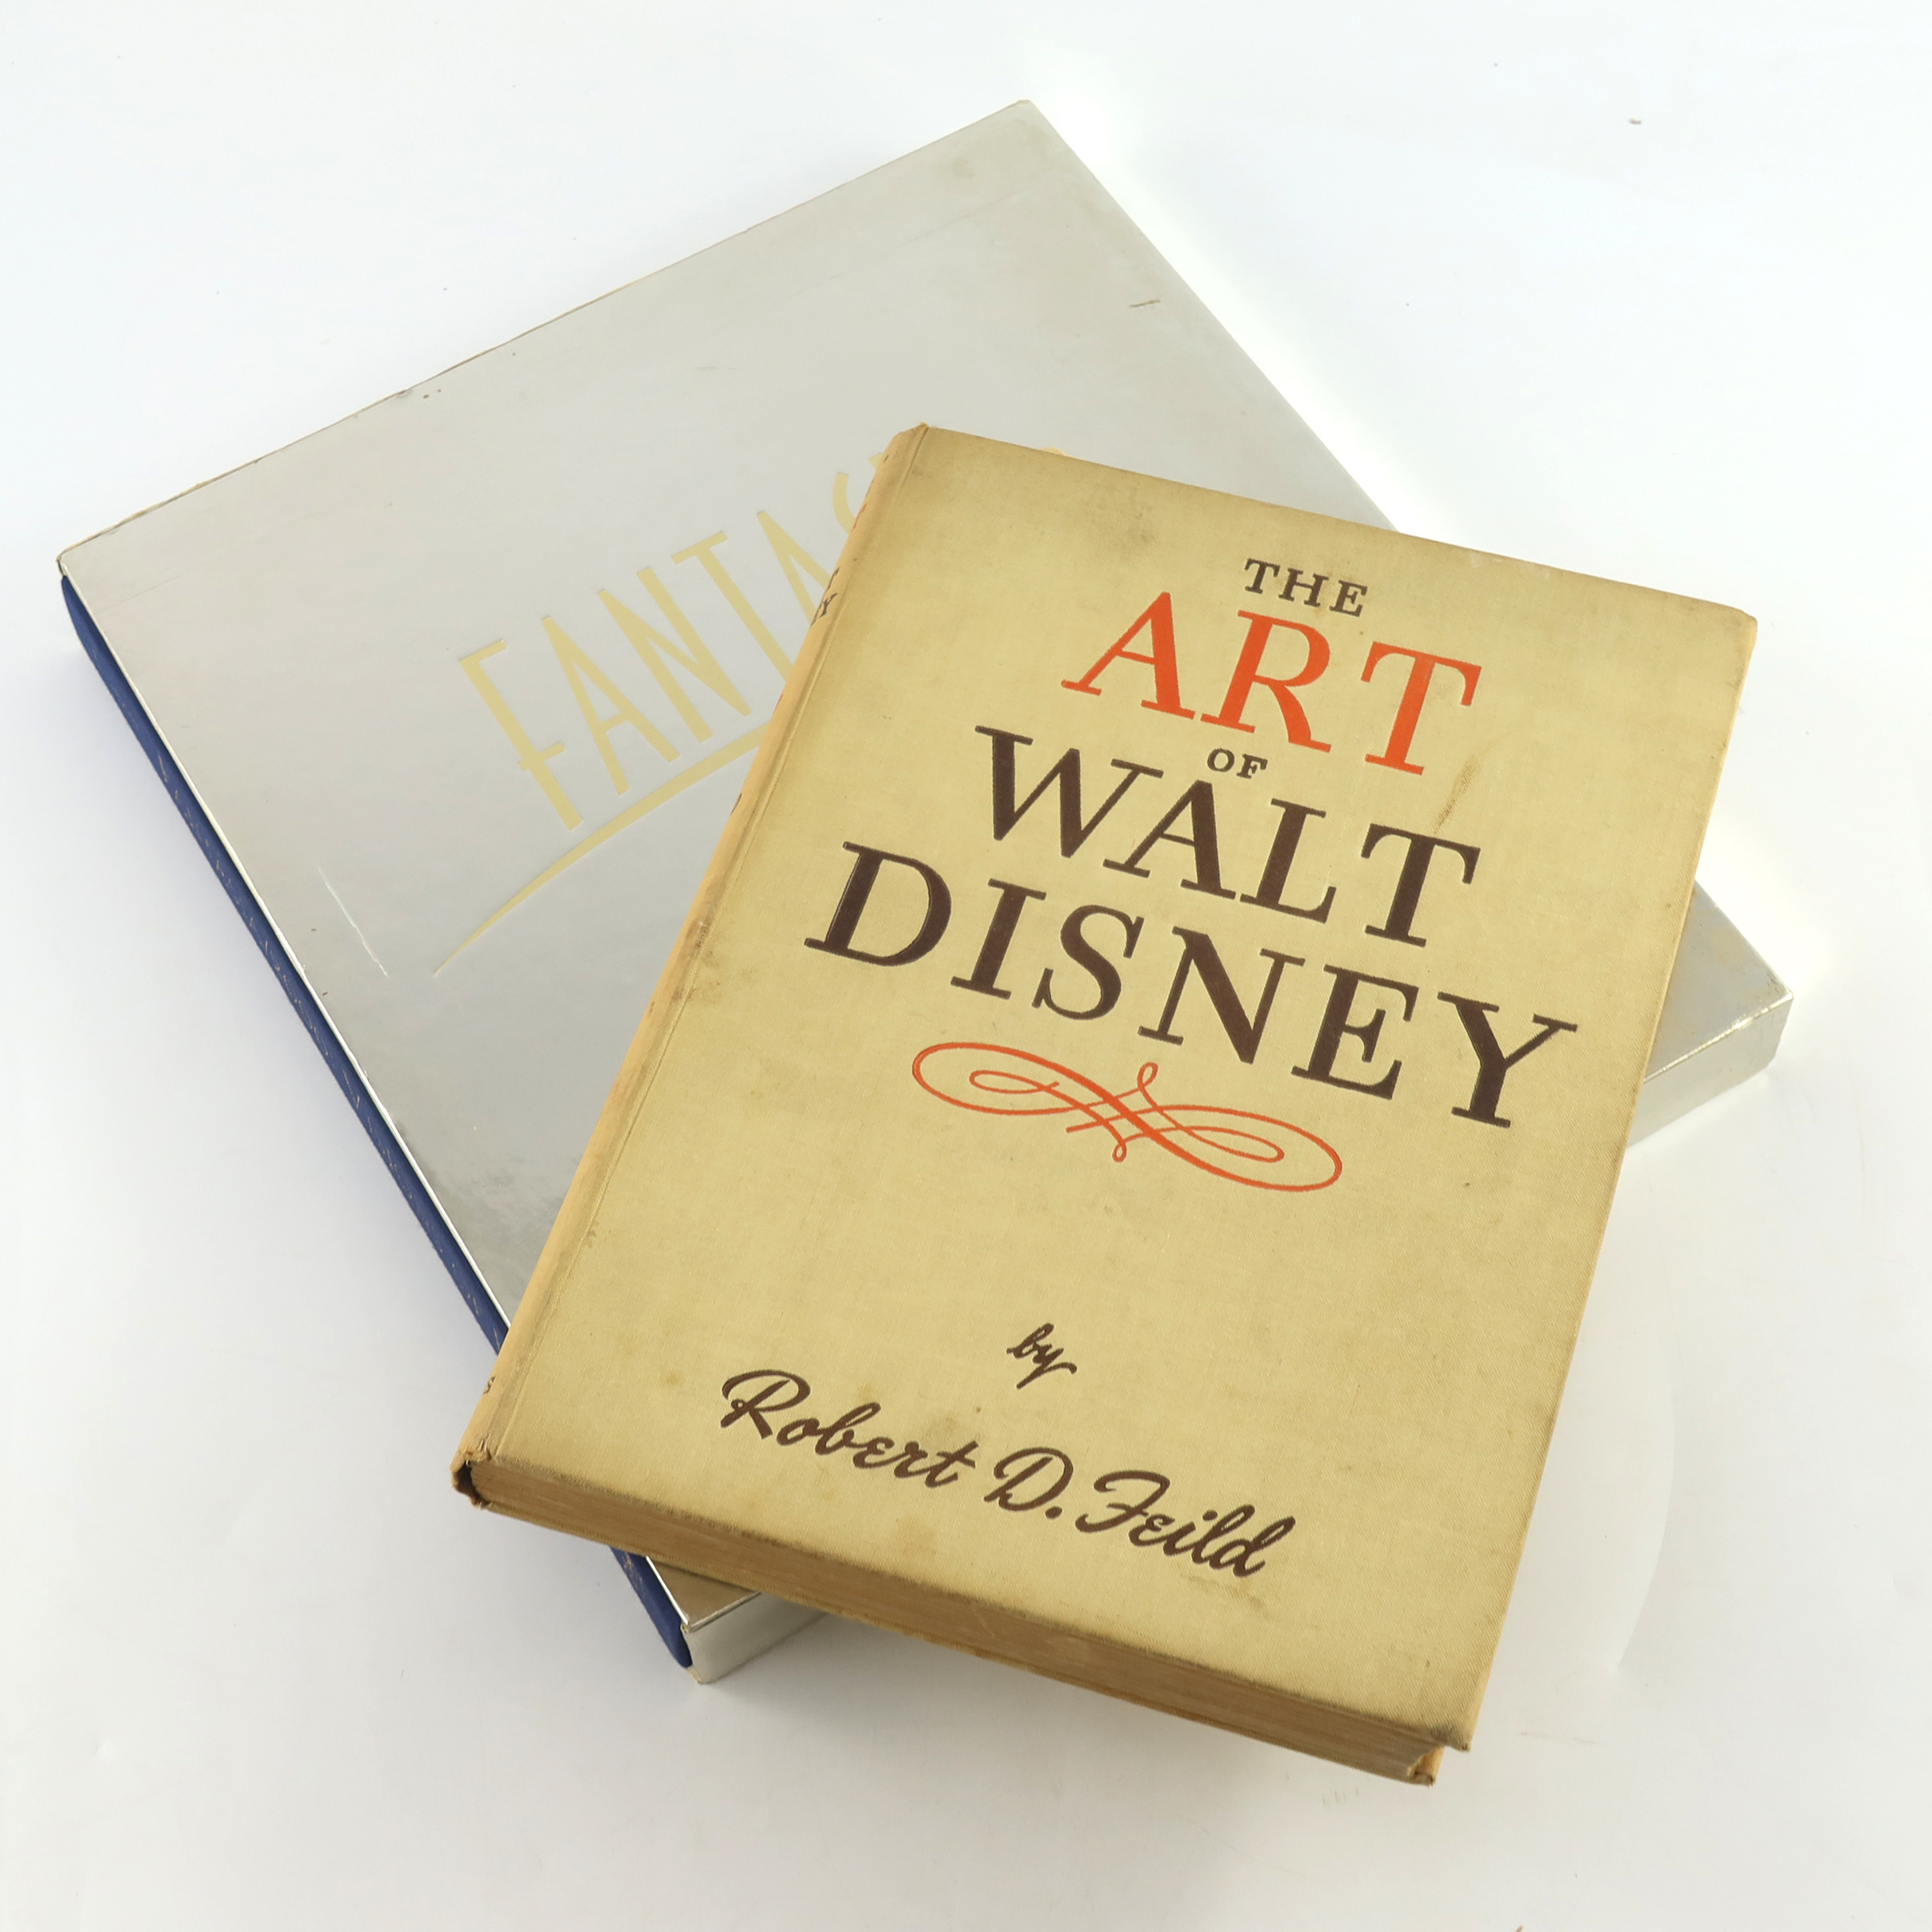 Robert D. Feild, The Art of Walt Disney, 1944, Collins, colour and monochrome illustrations, cloth